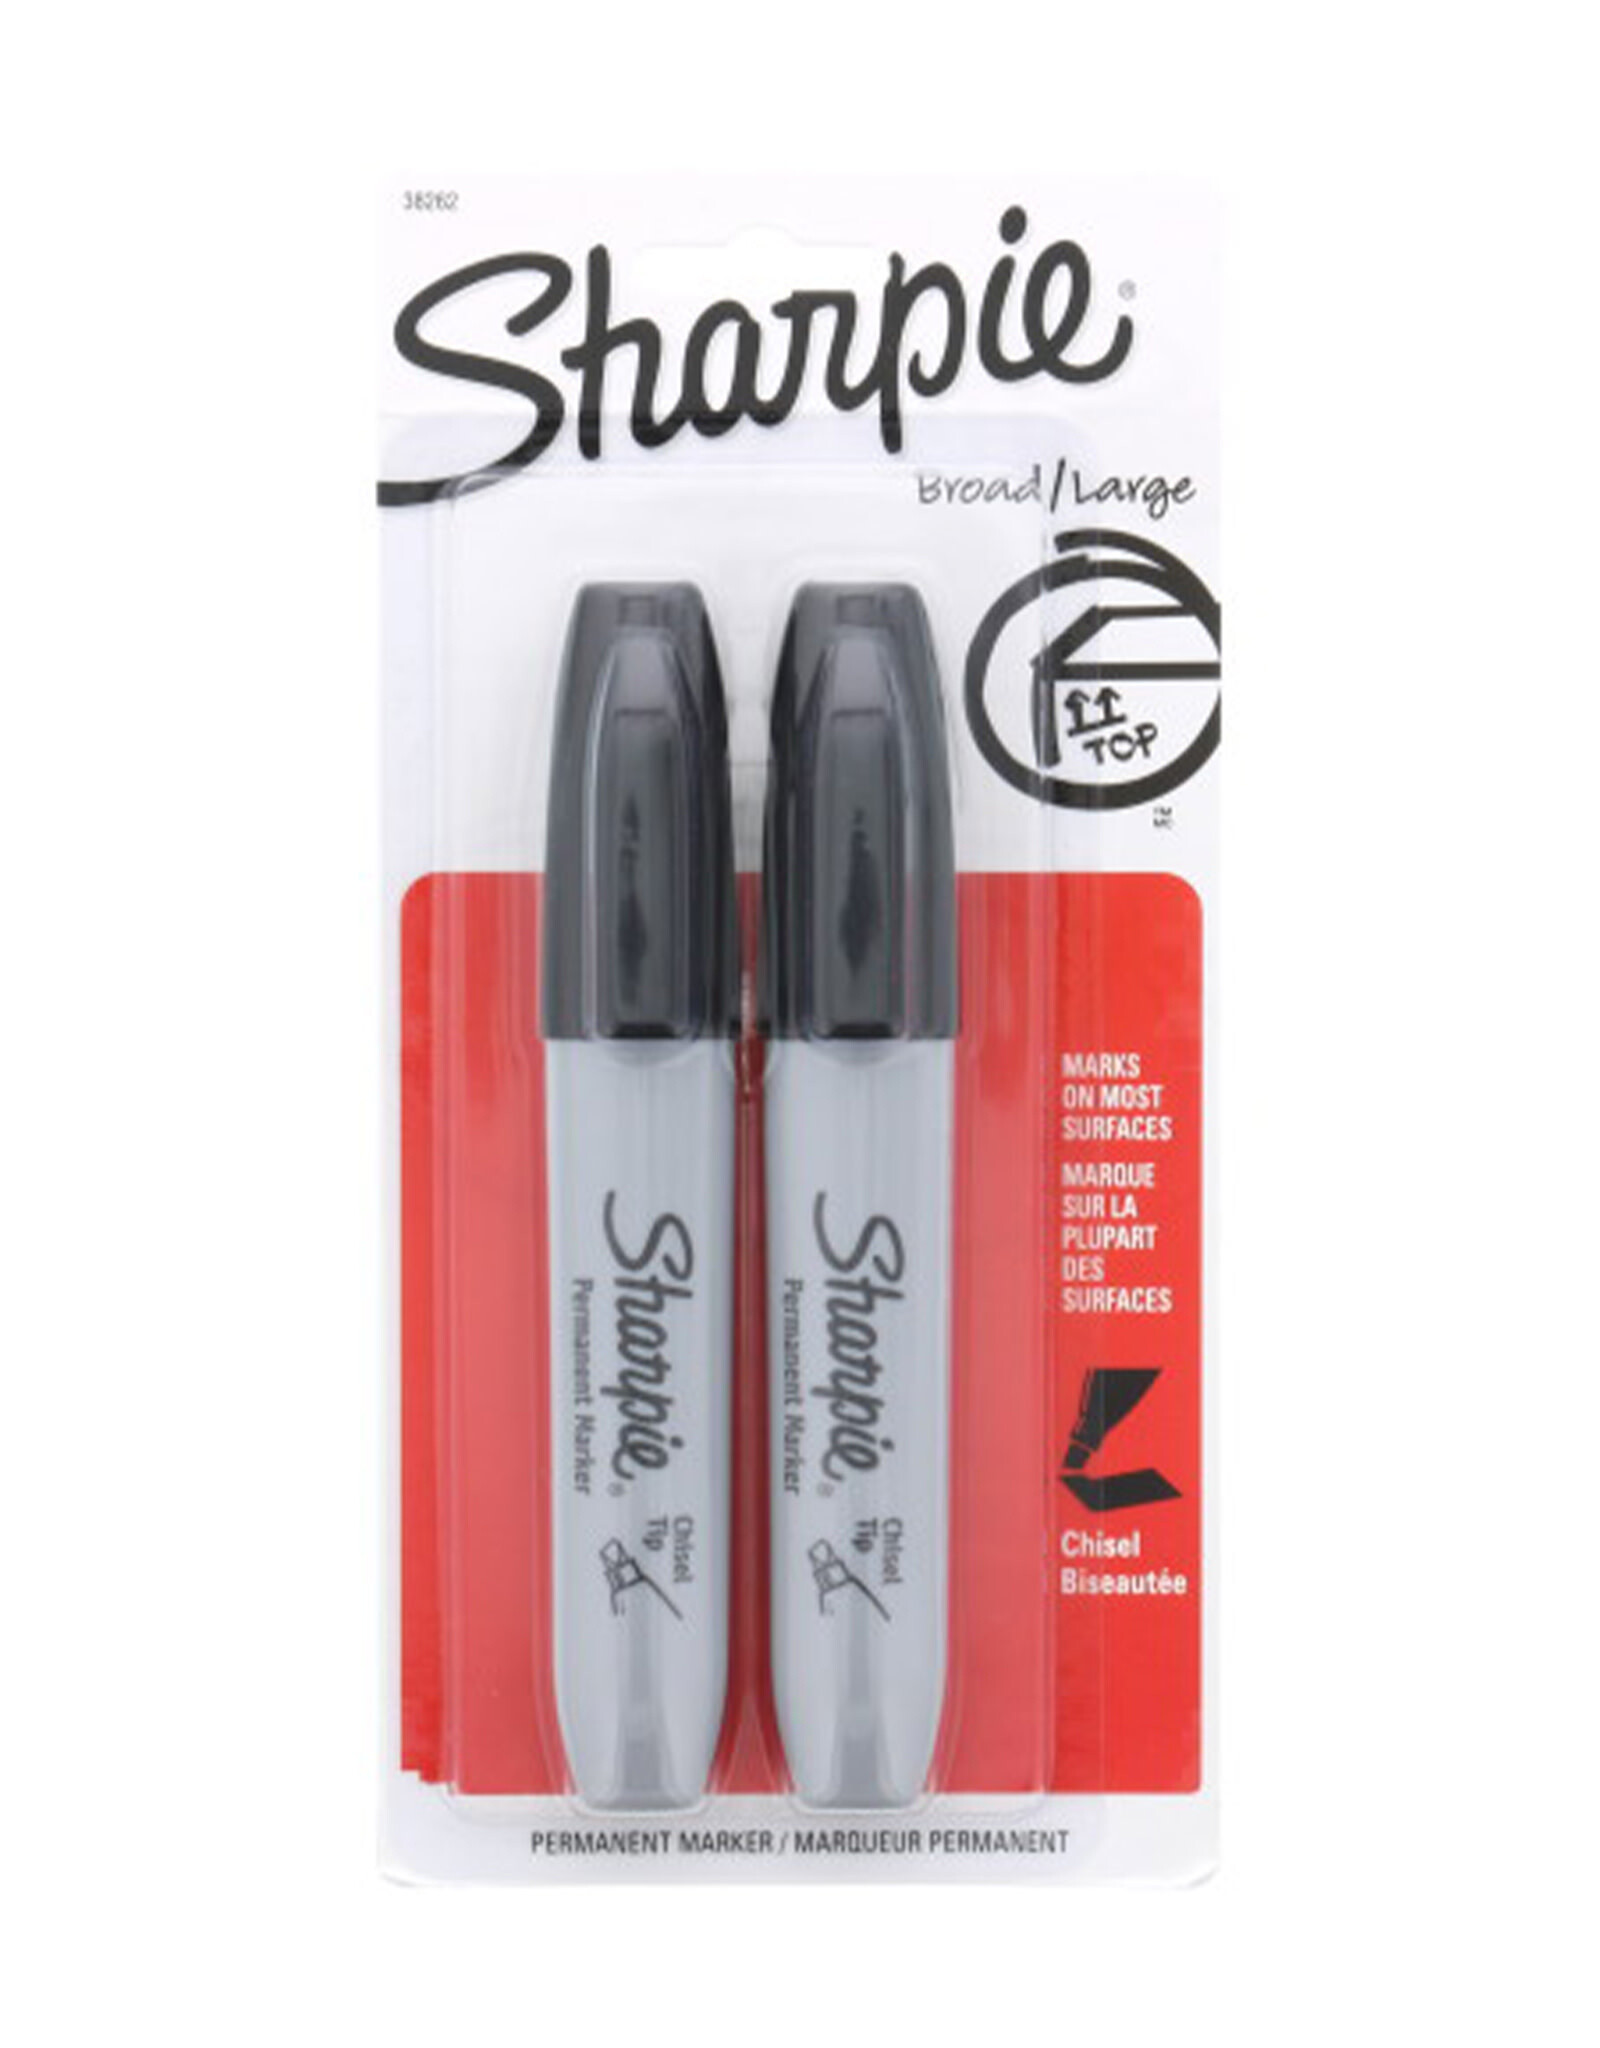 Sharpie Markers, Black, Chisel Tip, Carded, Set of 2